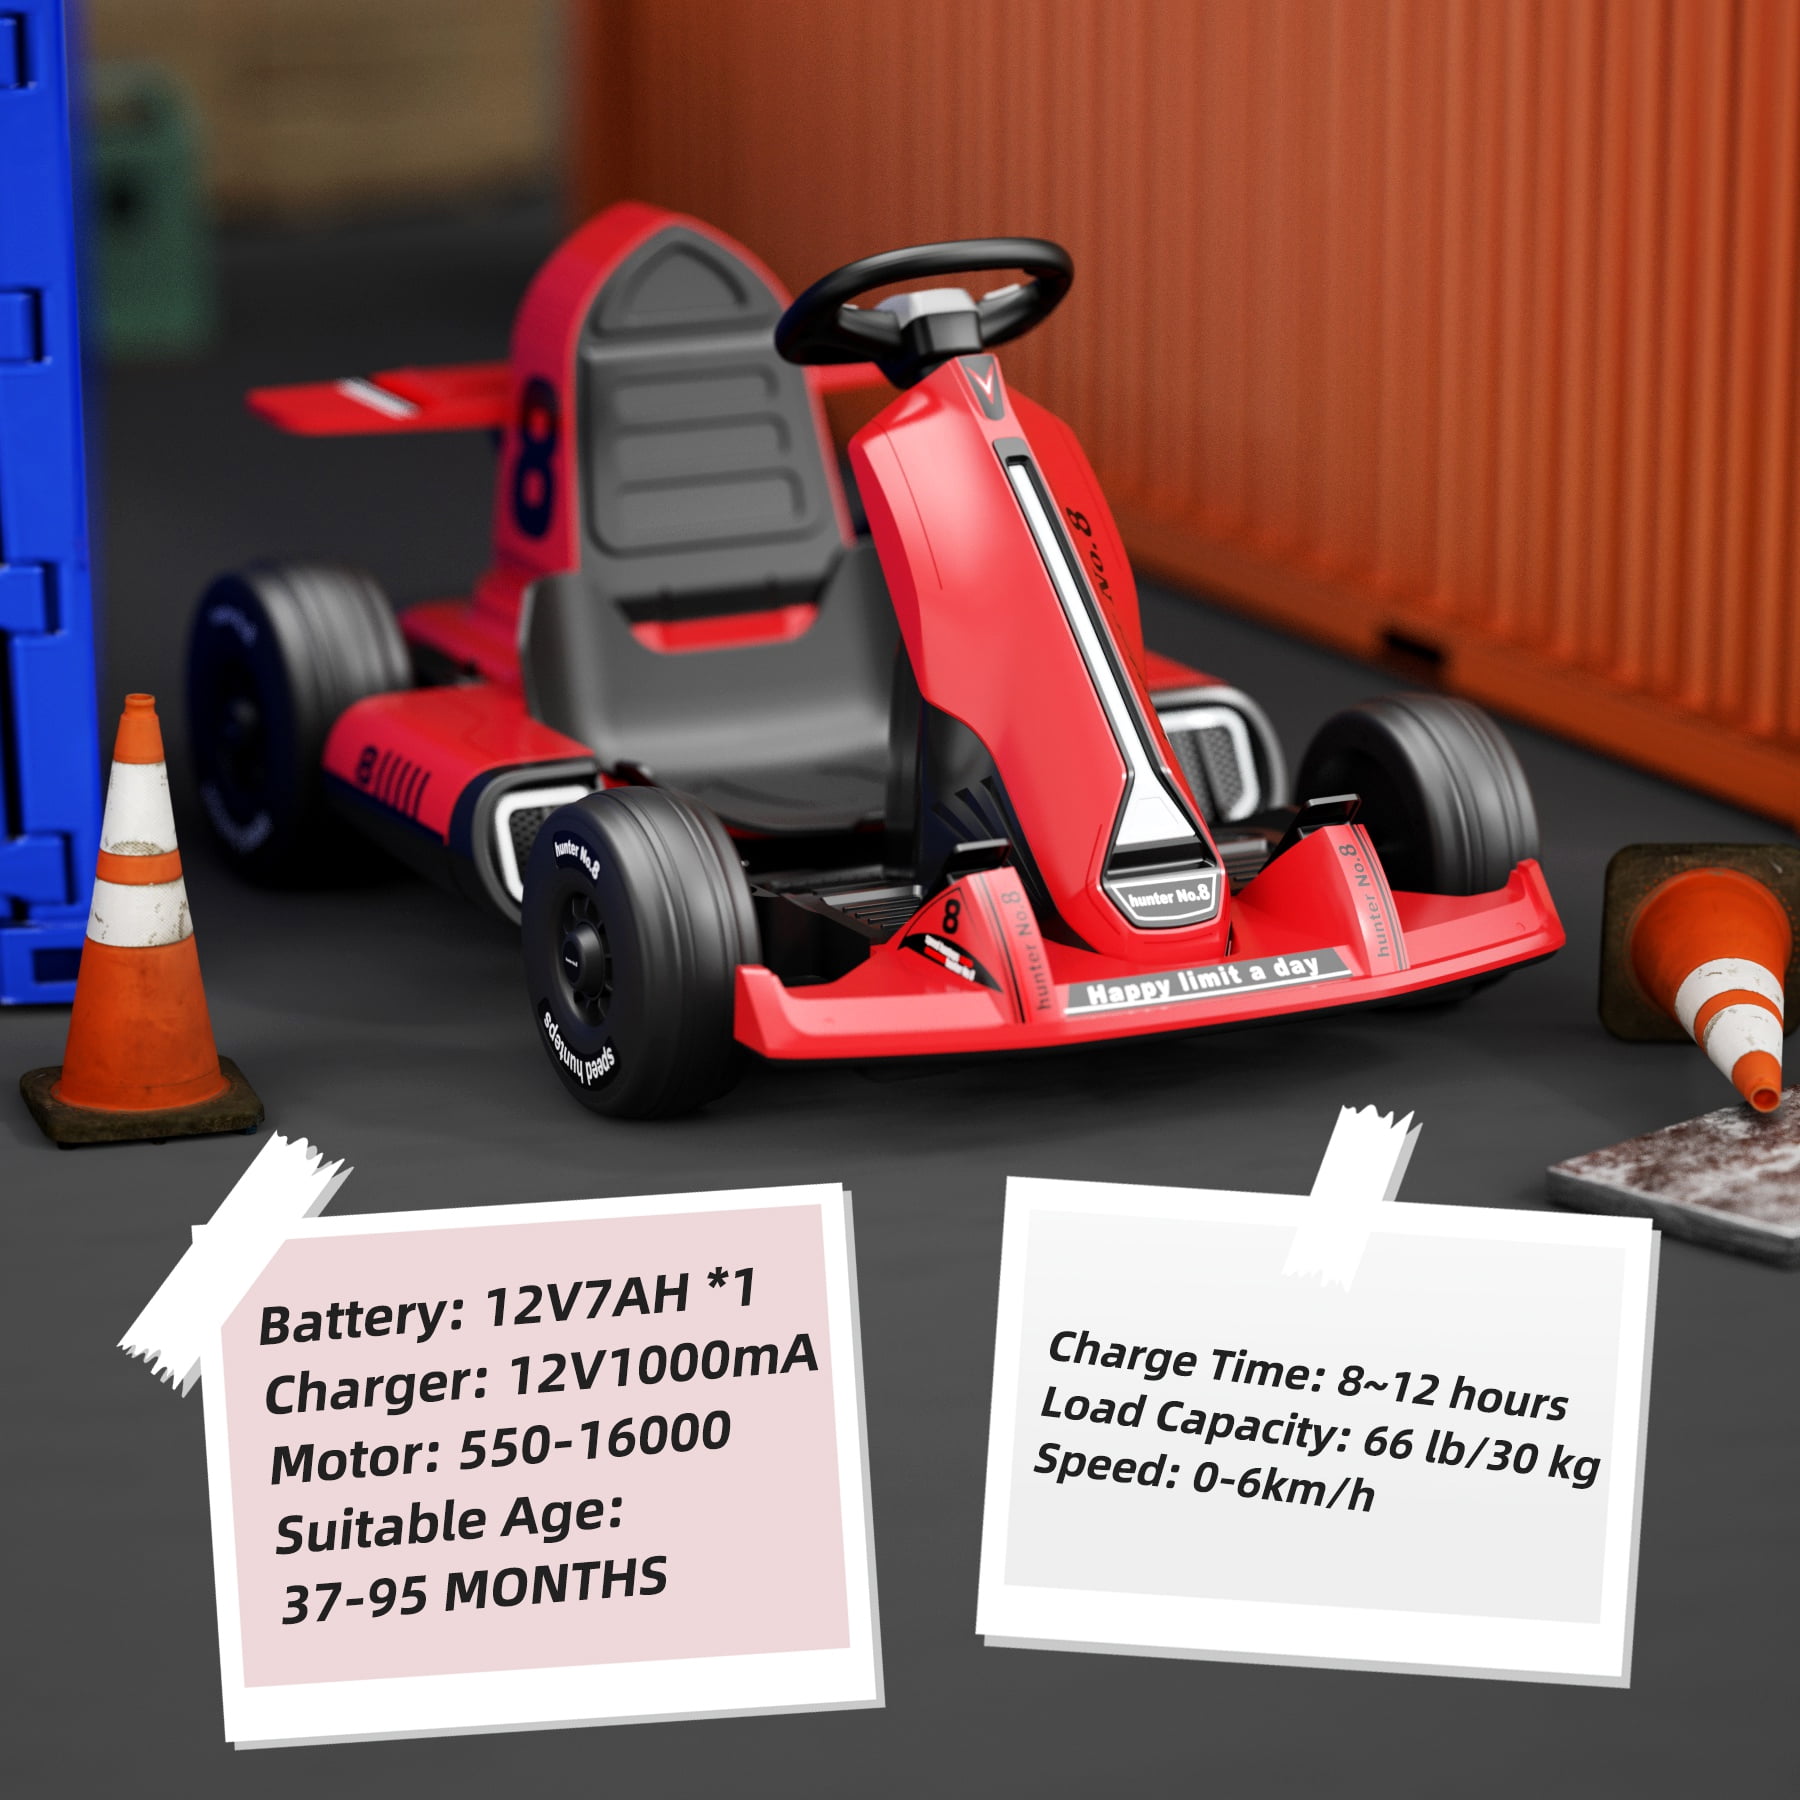 XJD Electric Go Kart 12V 7Ah Battery Powered Pedal Go Karts for 3+